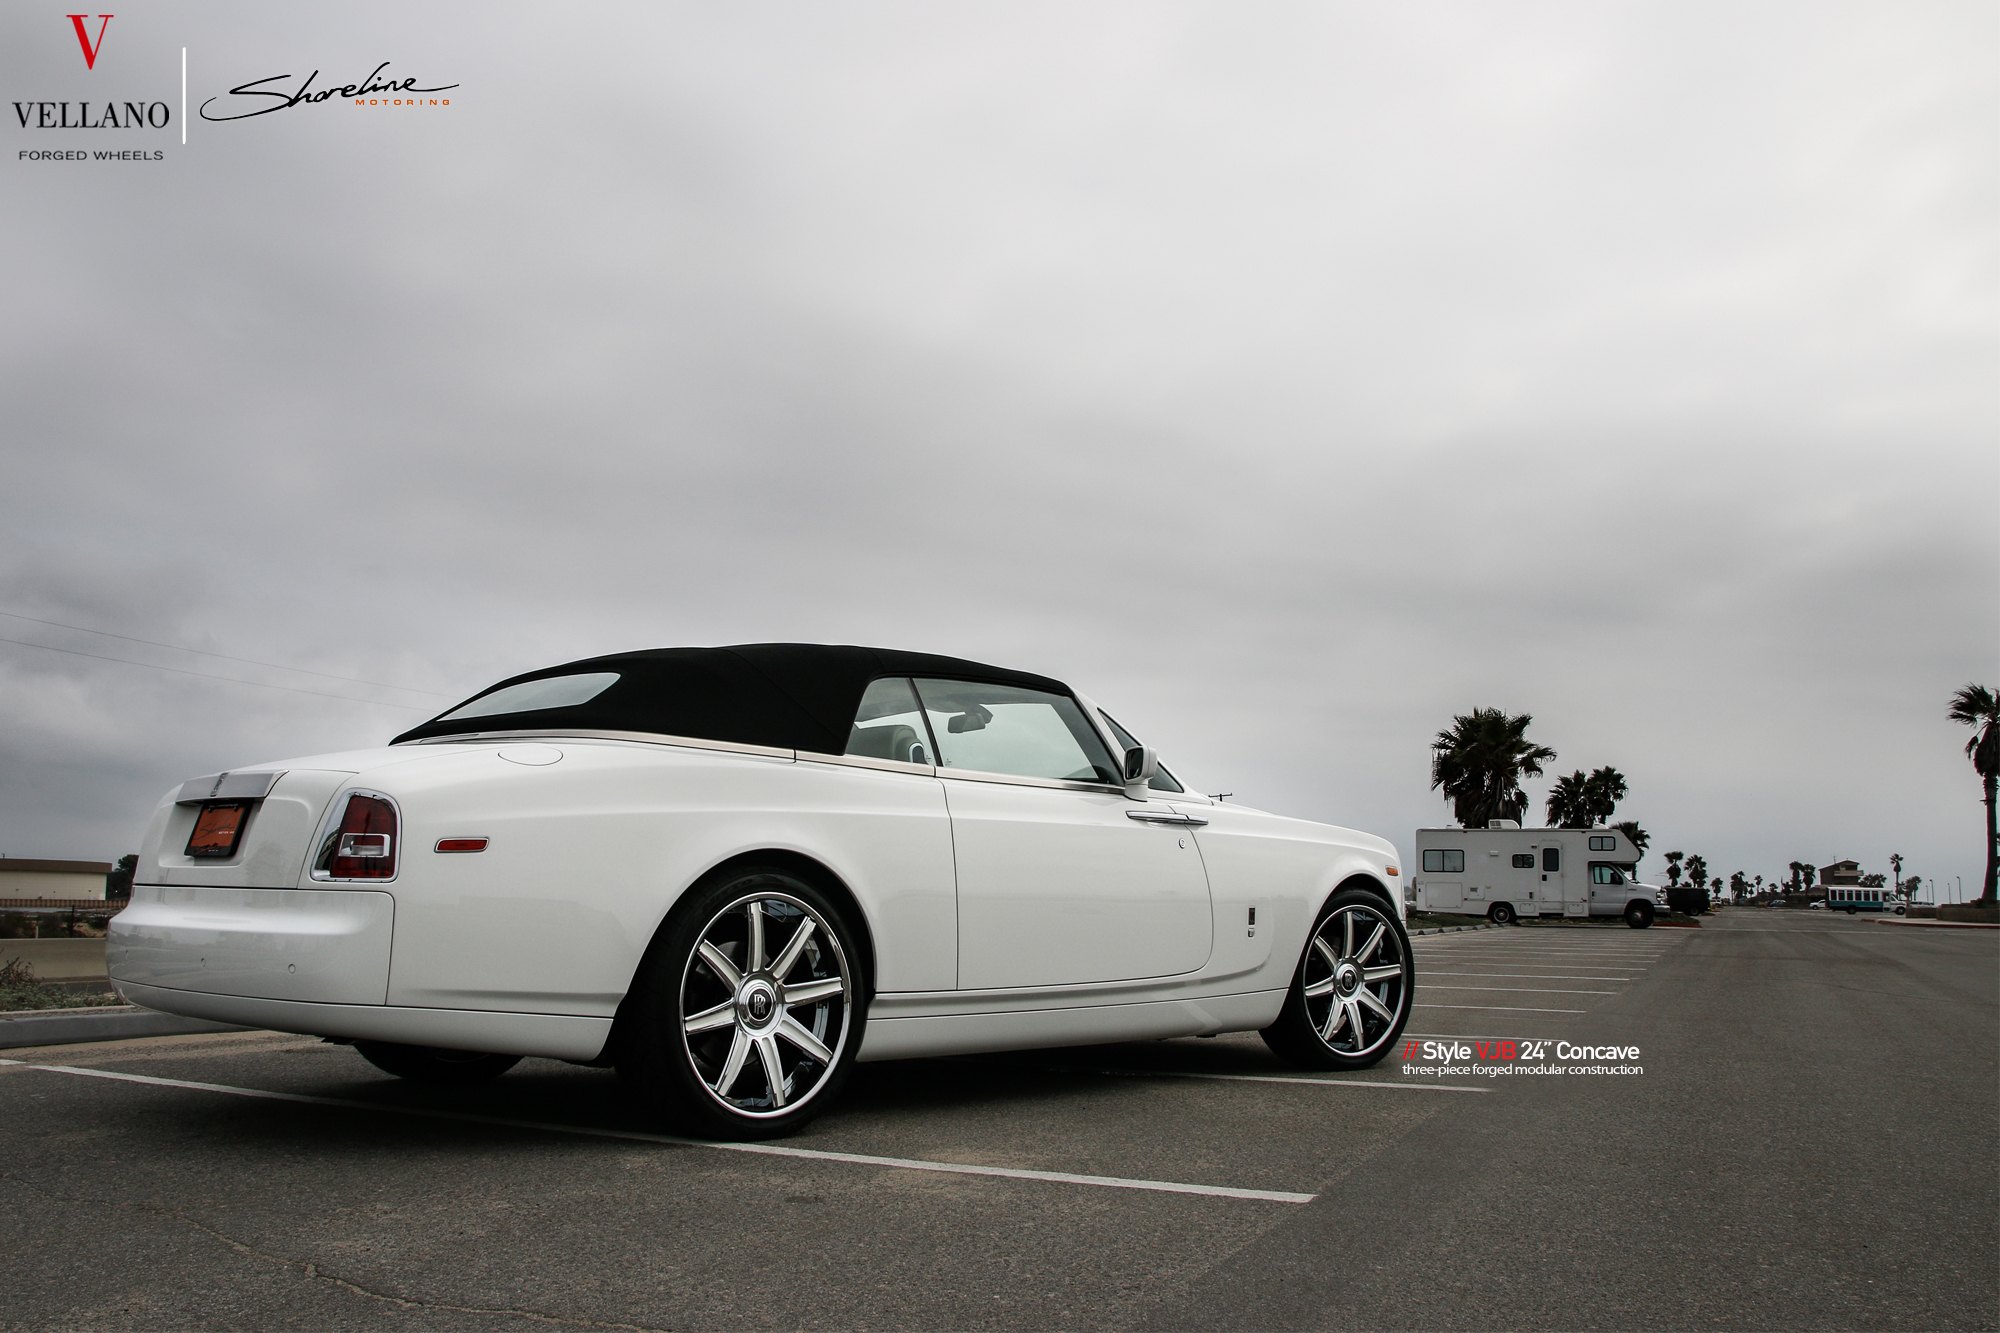 Red Smoke Taillights on White Rolls Royce Phantom - Photo by Vellano